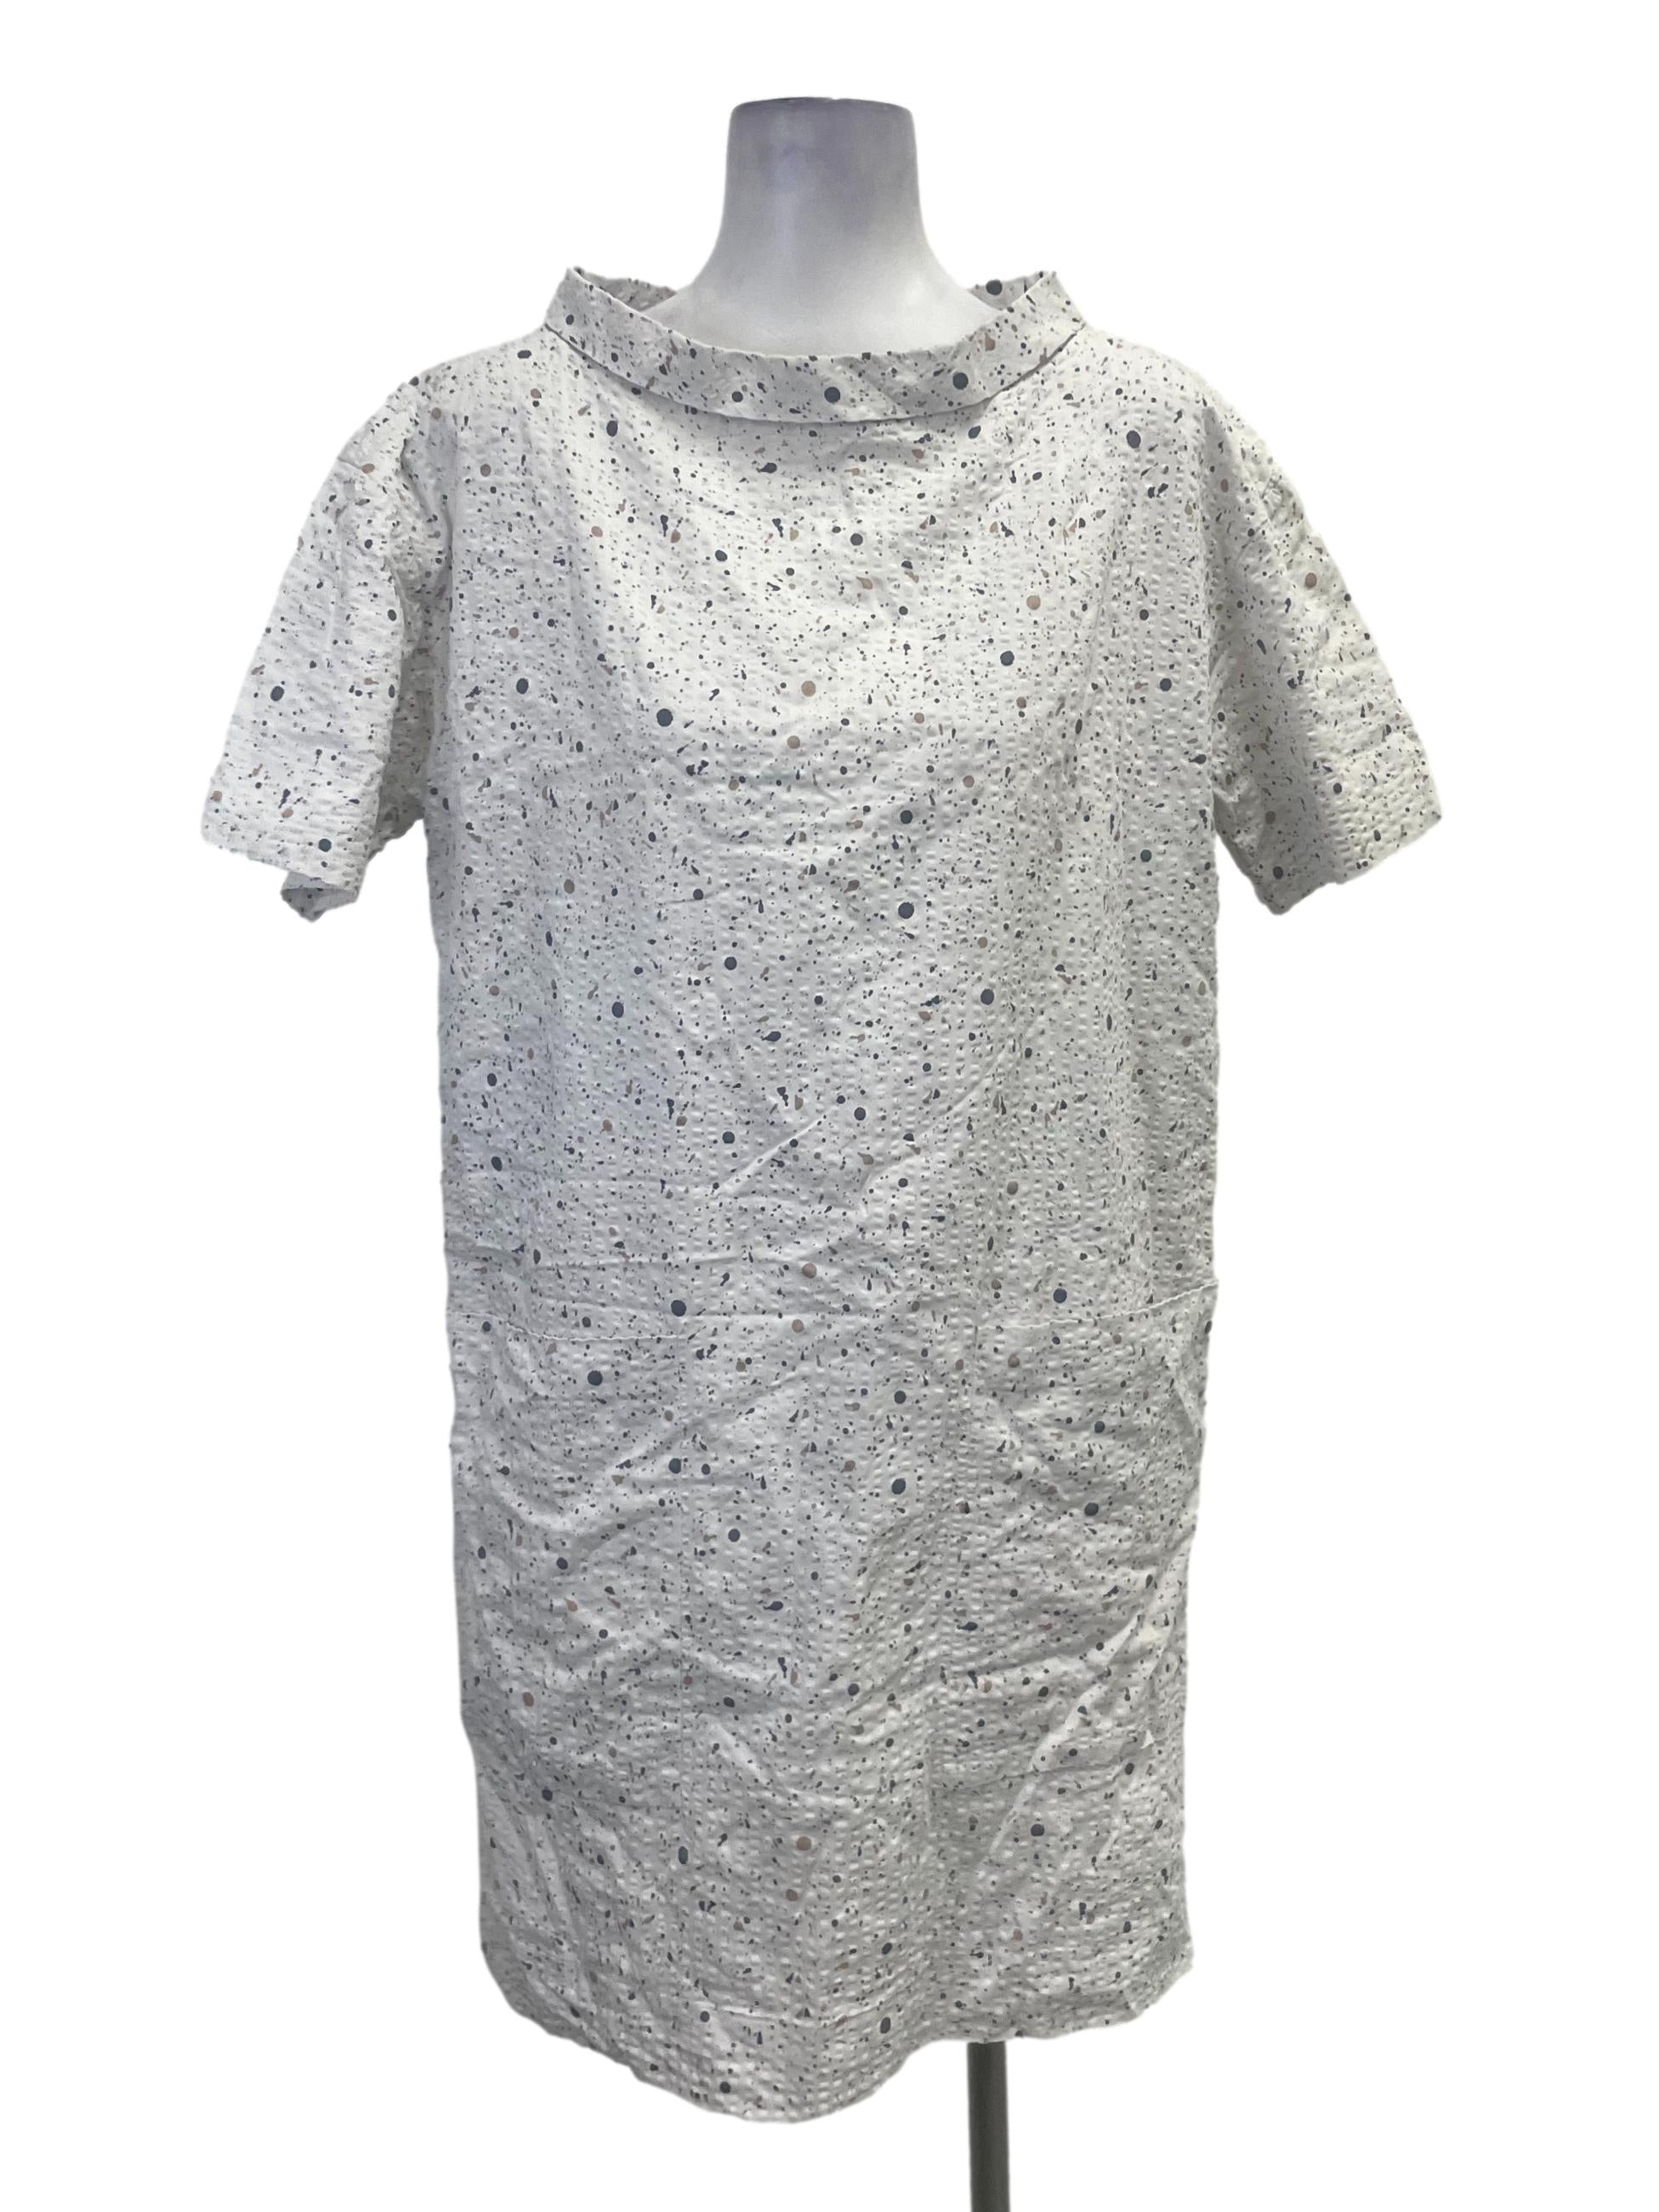 White Spatter Paint Sleeve Dress